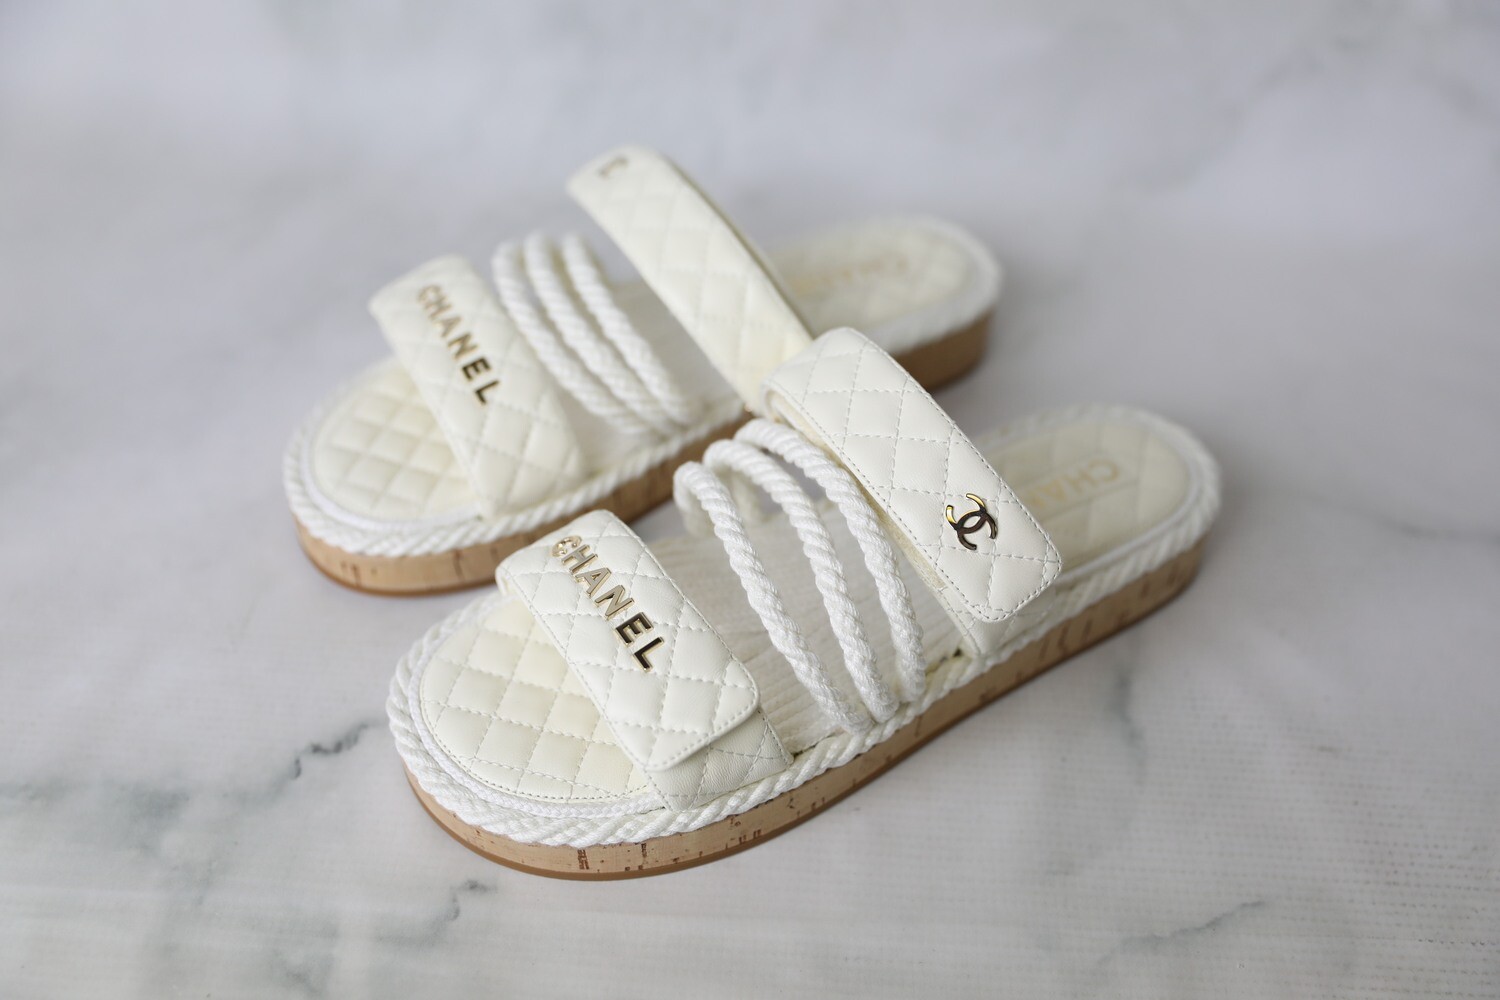 Chanel Rope Sandals, White, Size 40, New in Box WA001 - Julia Rose Boston